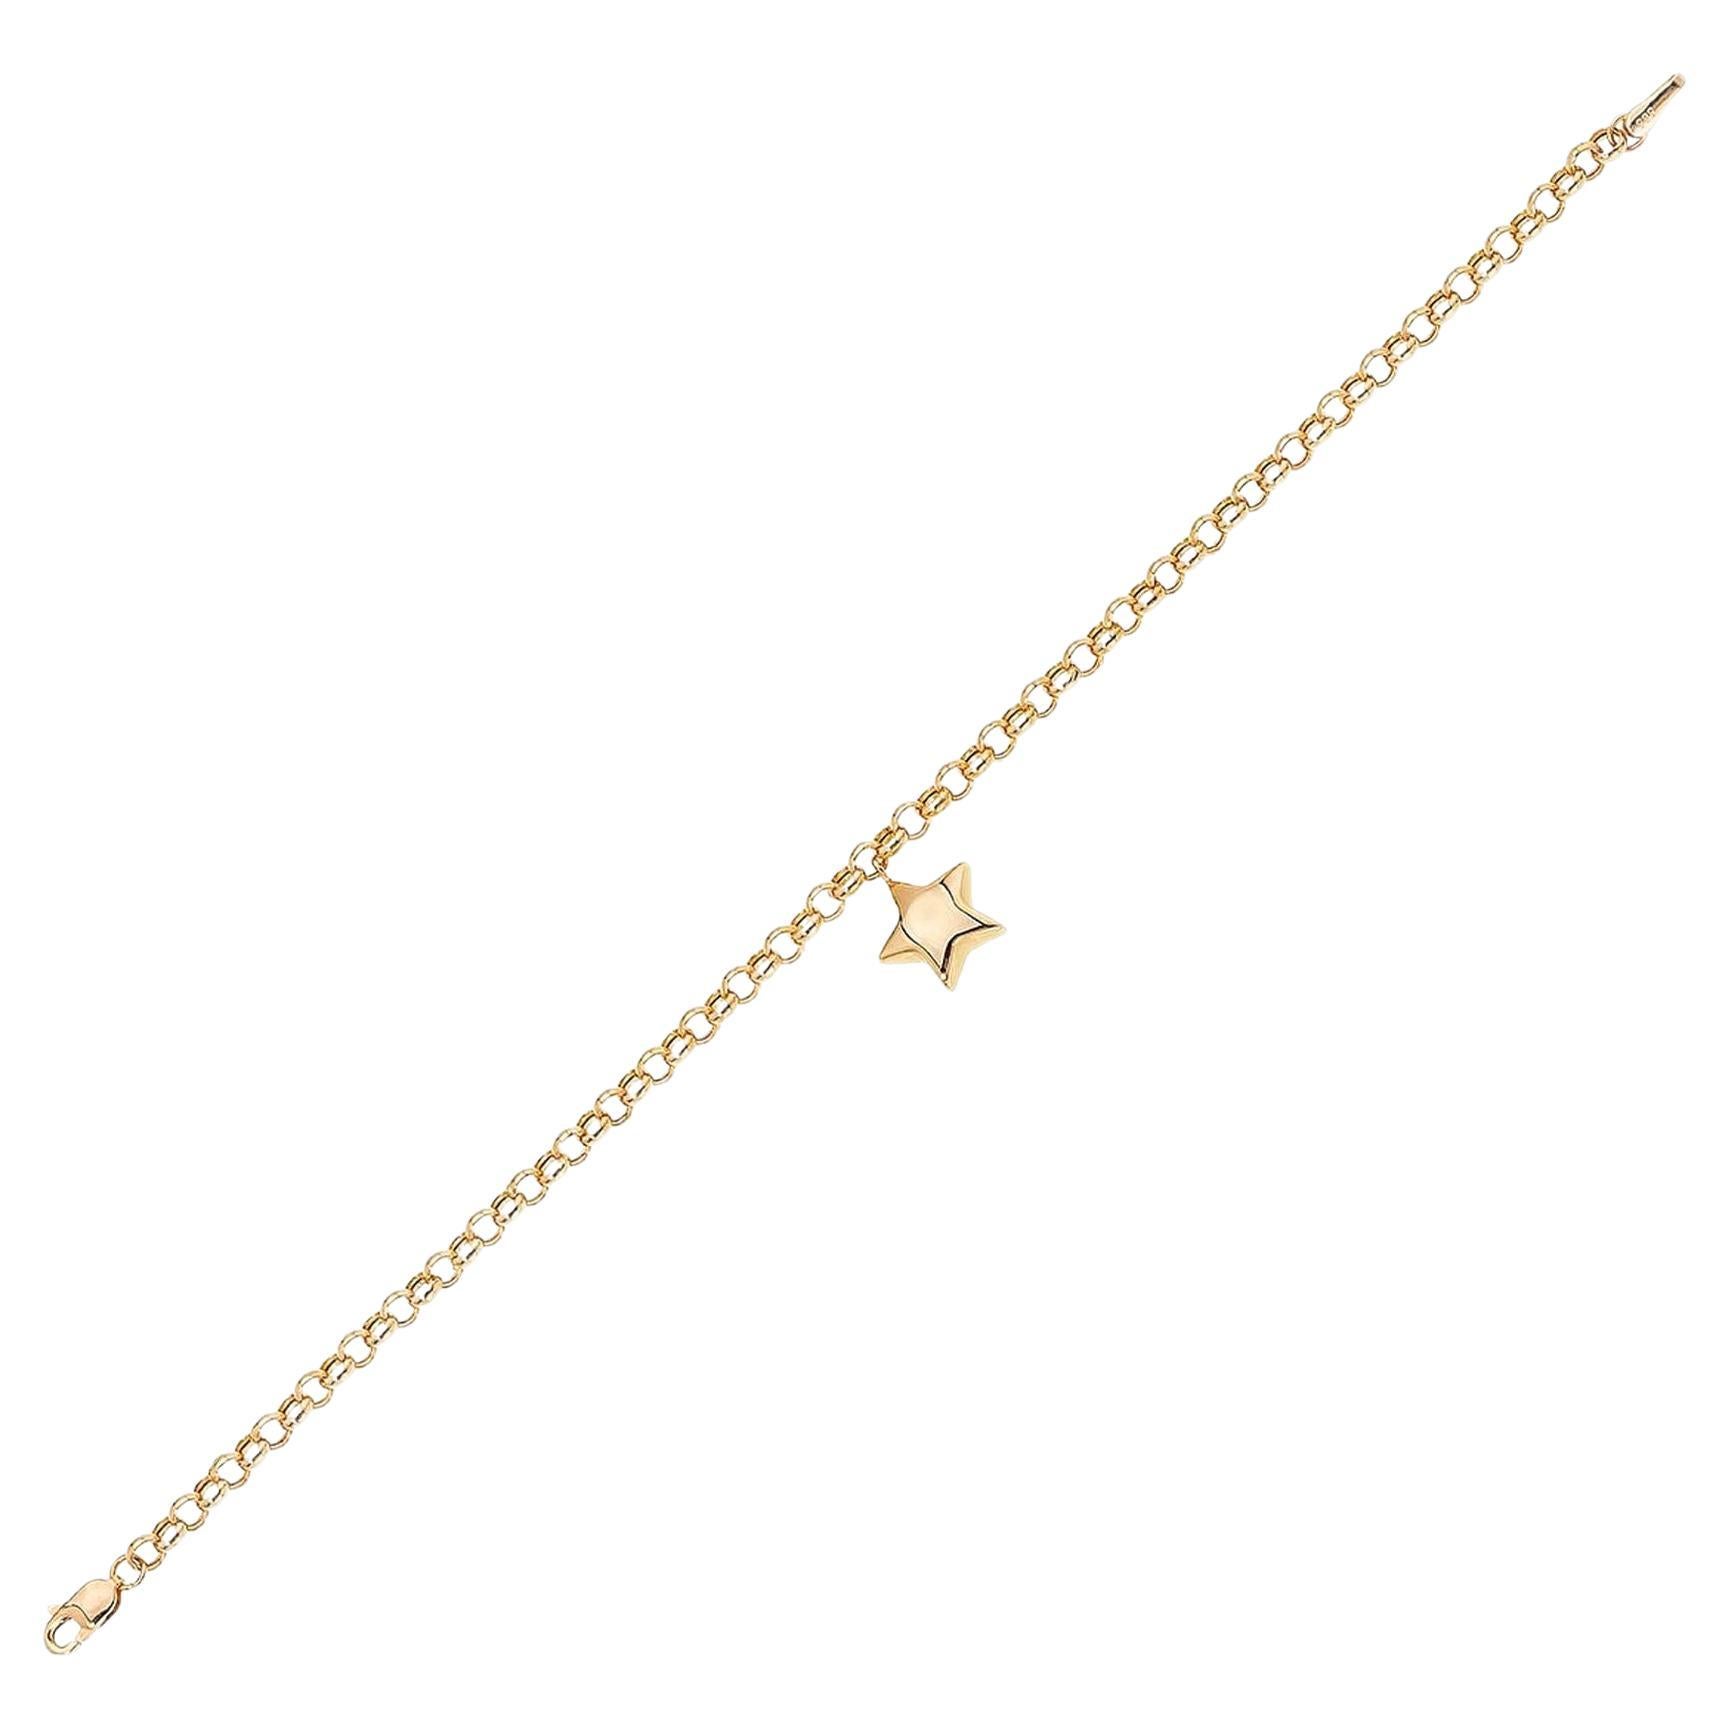 14 Karat Gold Star Charm Bracelet, Chain Bracelet with Star Shaped Pendant